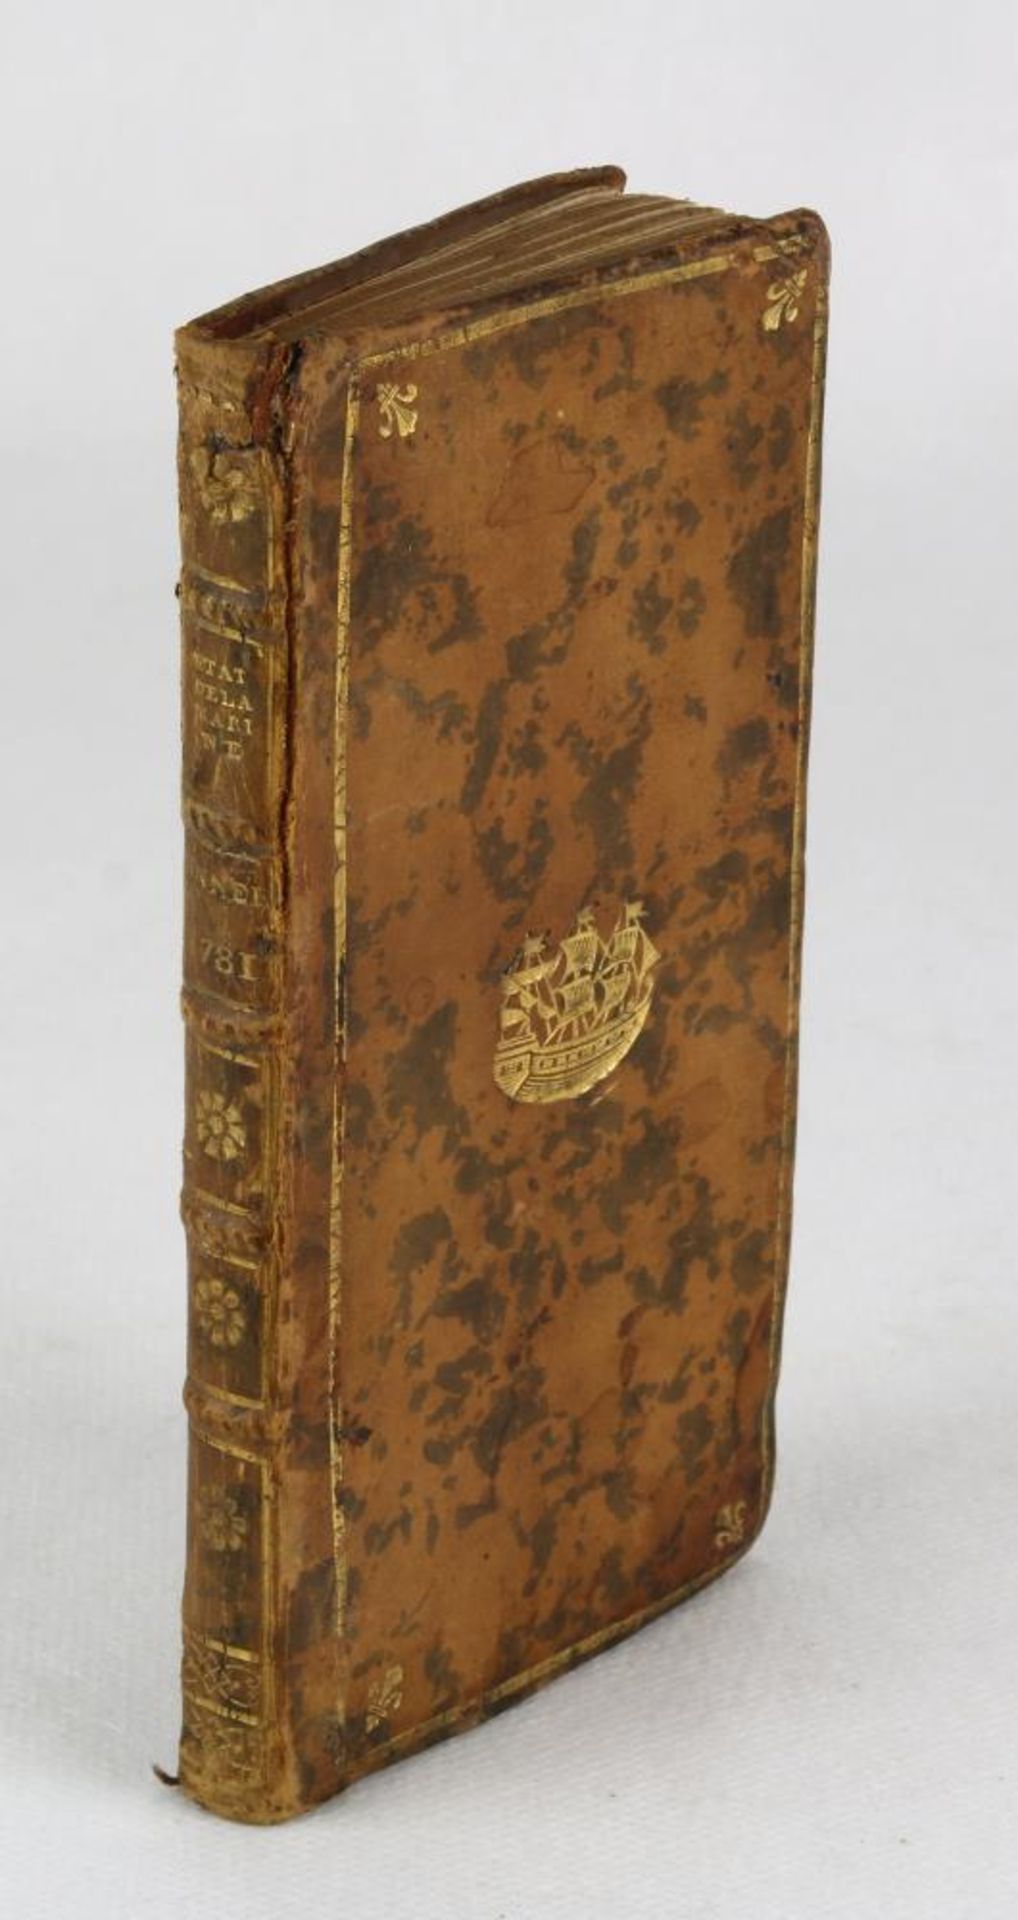 Etat de la Marine. Année 1781 a Paris. Originaler Lederband mit Goldprägungen. 114 Seiten. - Bild 3 aus 3